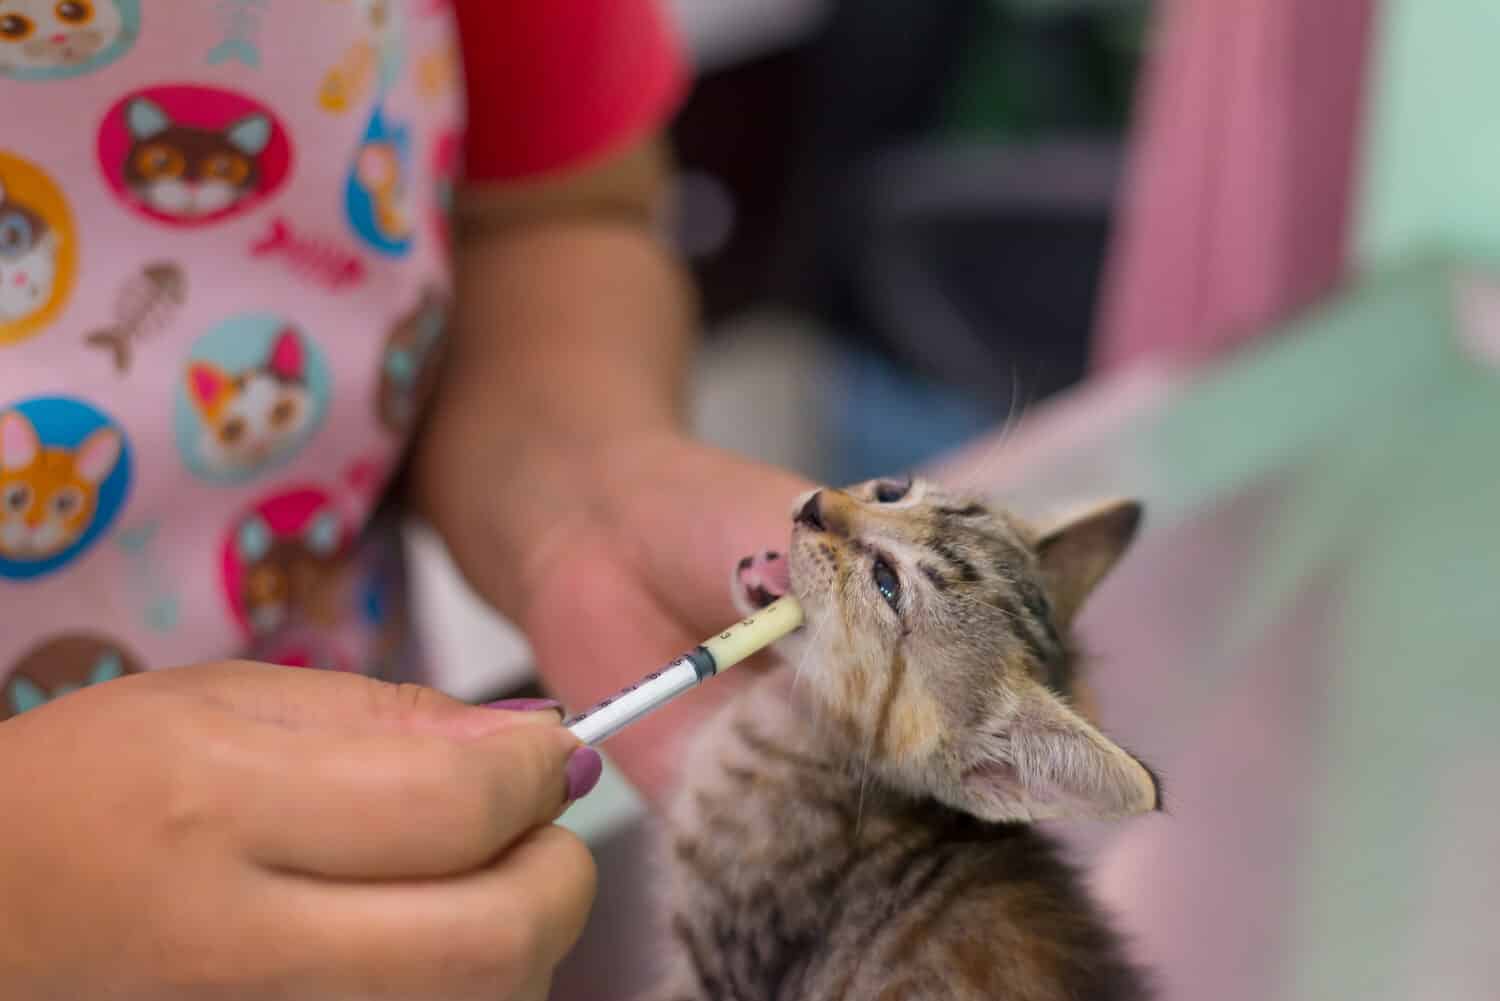 Deworming the kitten